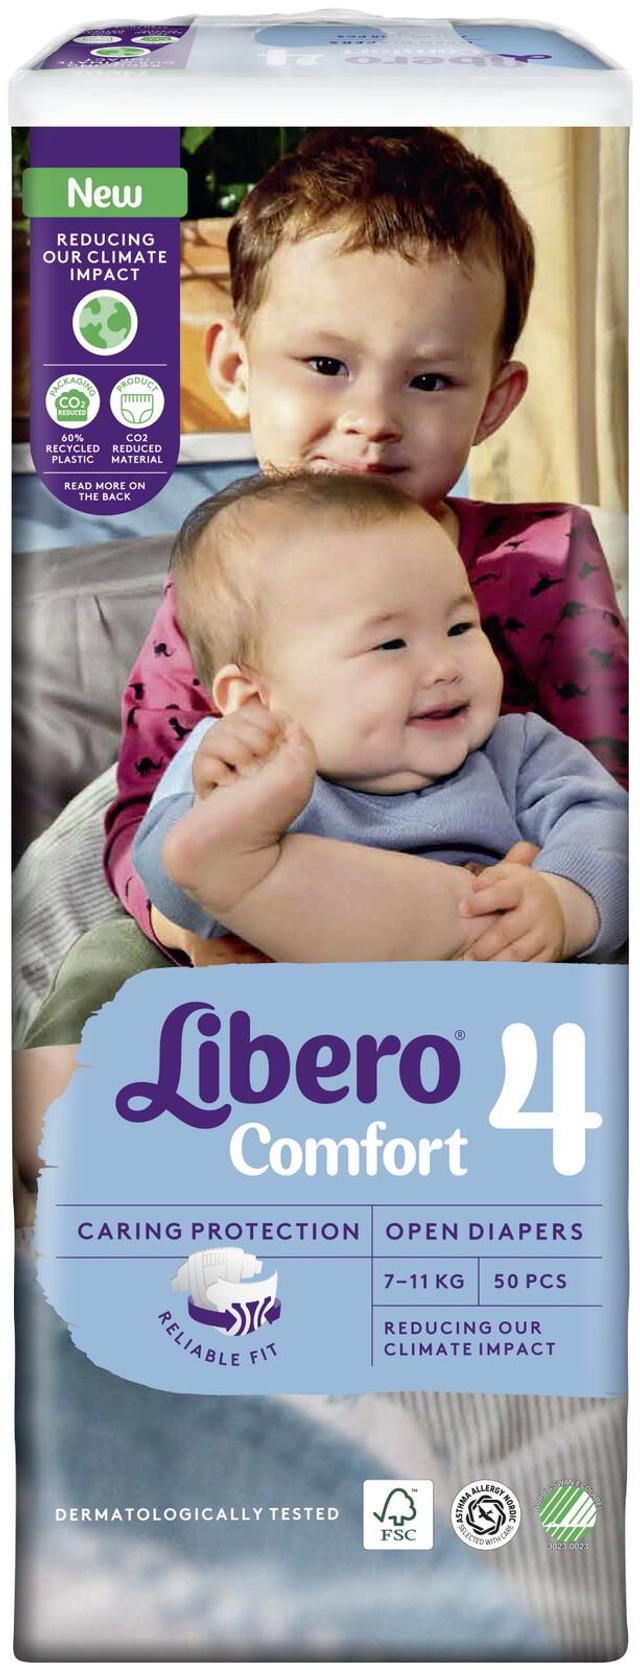 LIBERO Comfort teippivaippa koko 4, 50 kpl, 7-11kg